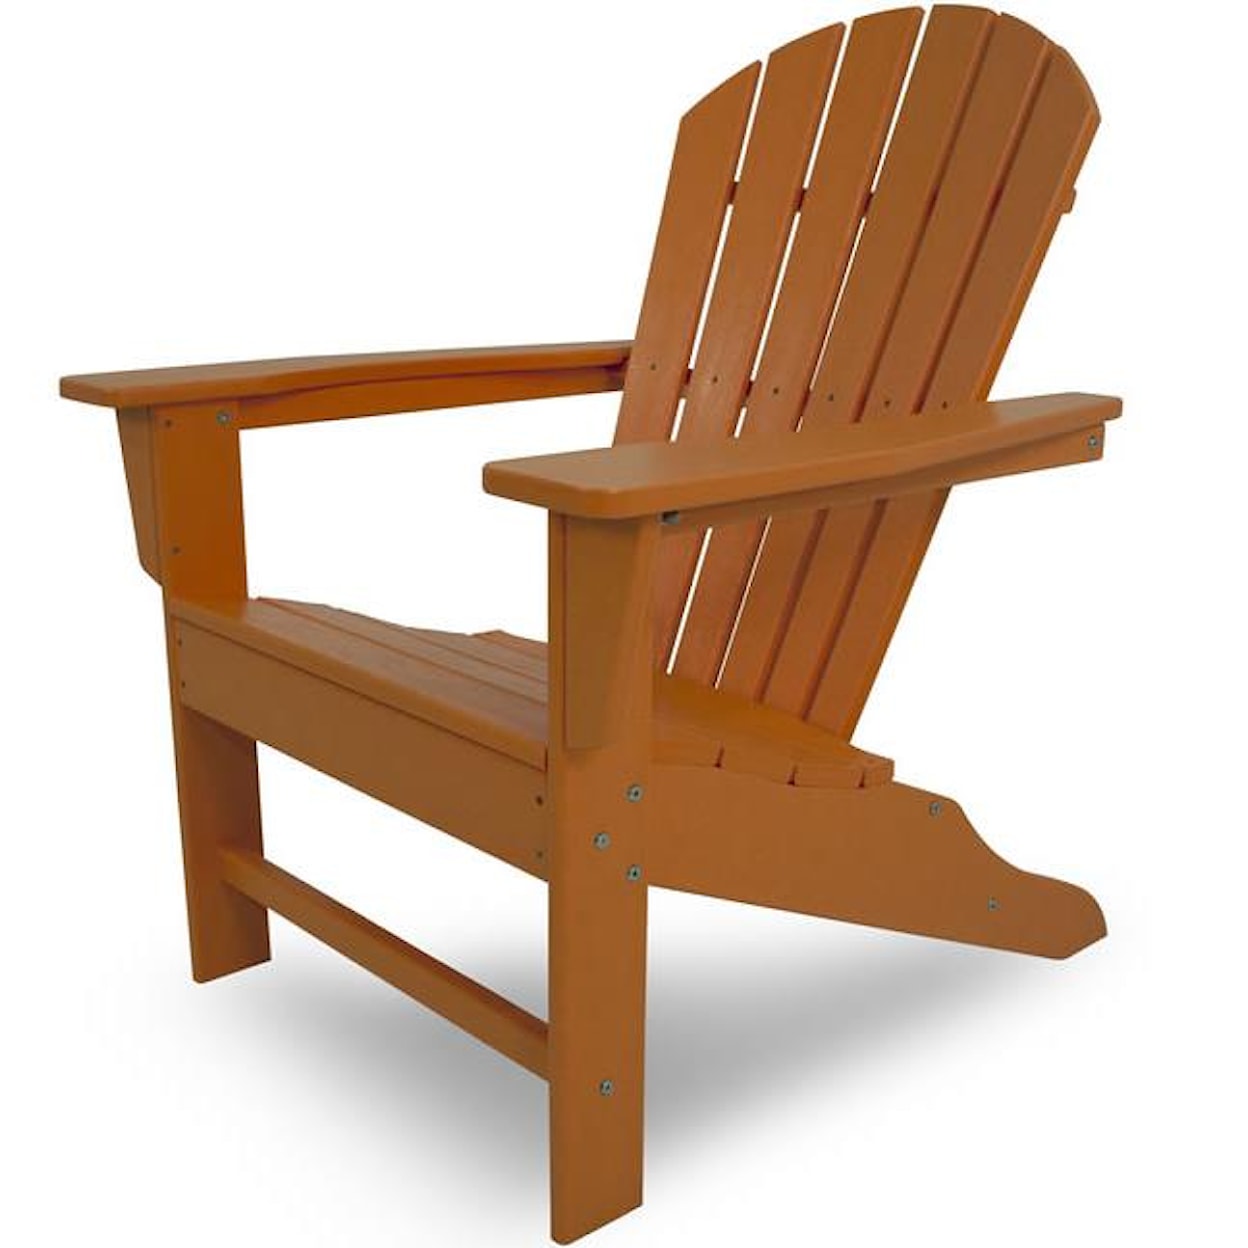 Polywood South Beach Adirondack Chair